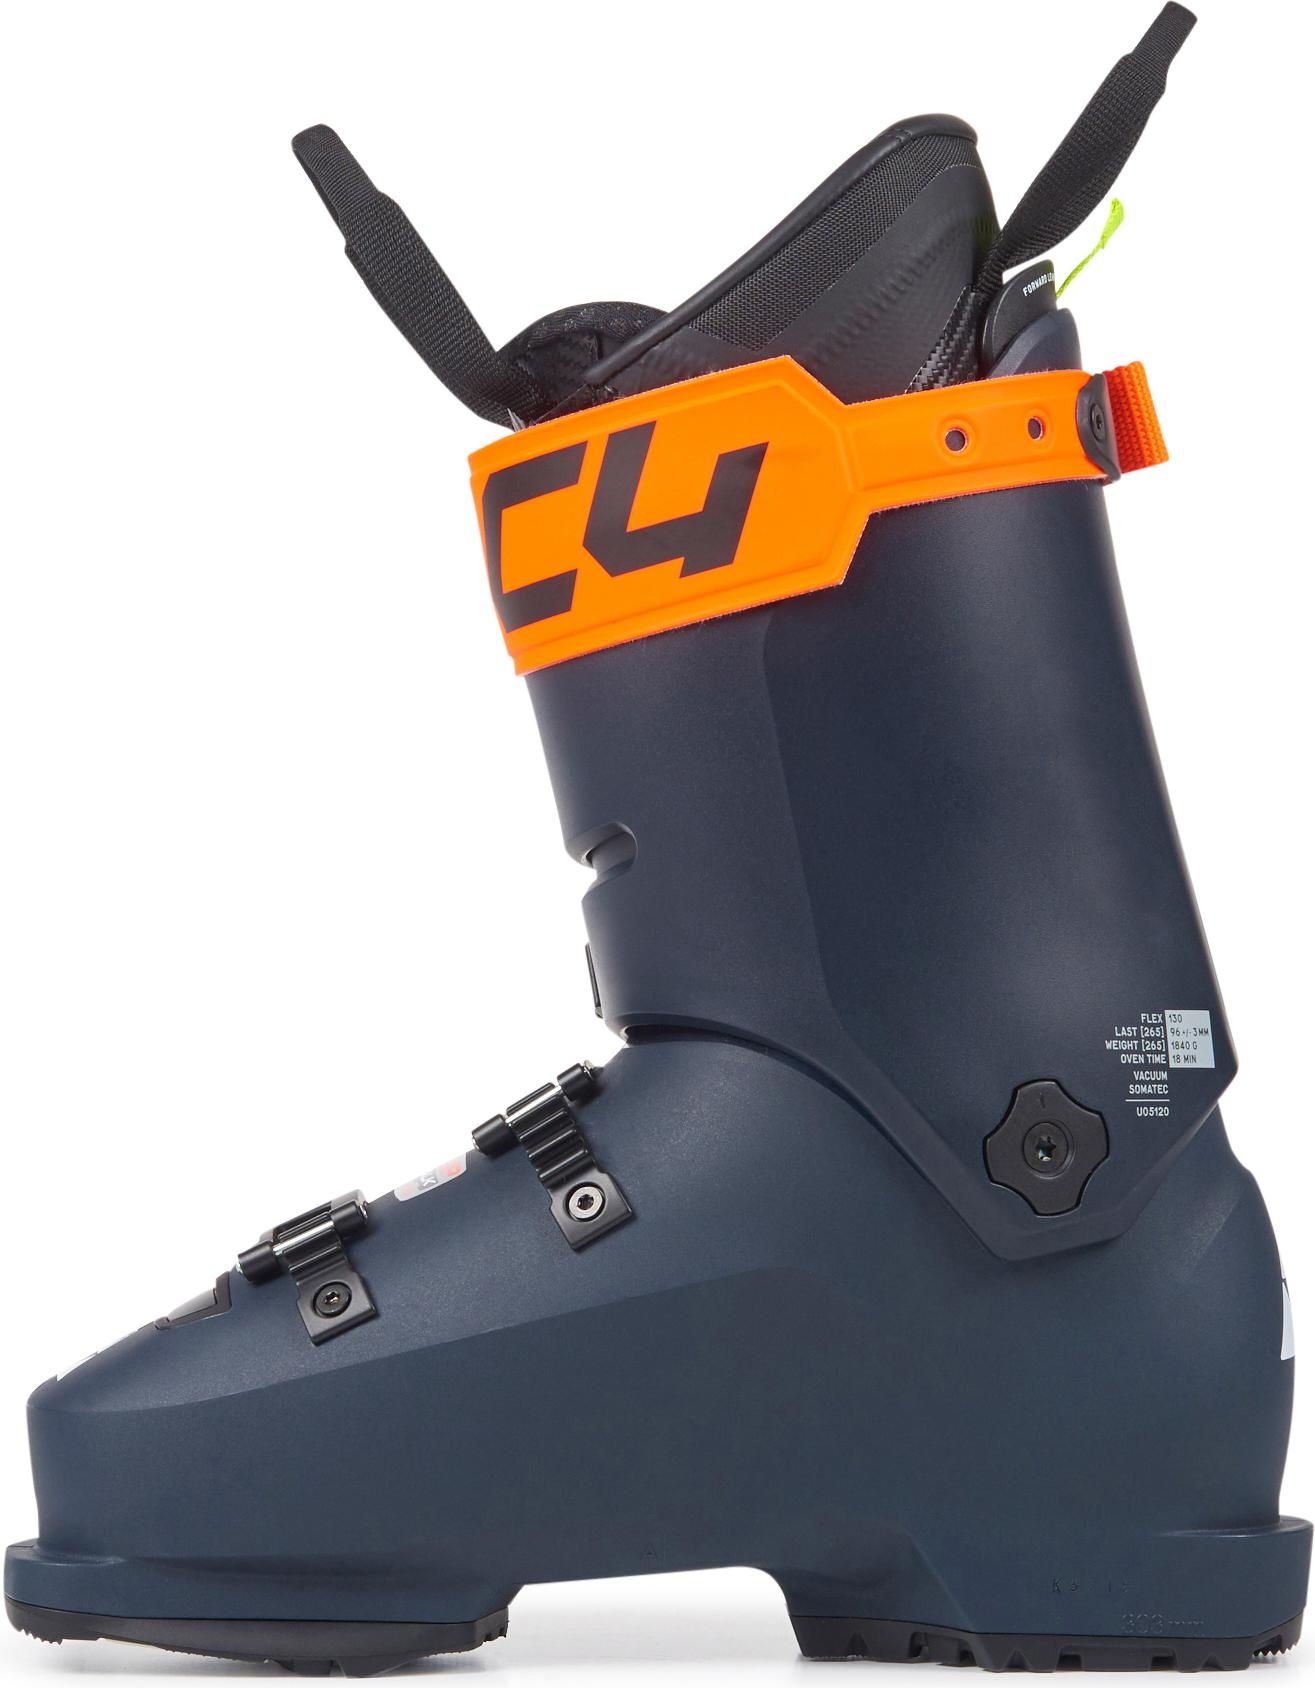 Горнолыжные ботинки Fischer Rc4 The Curv Gt 130 Vacuum Walk 2021, darkblue/darkblue, 27.5